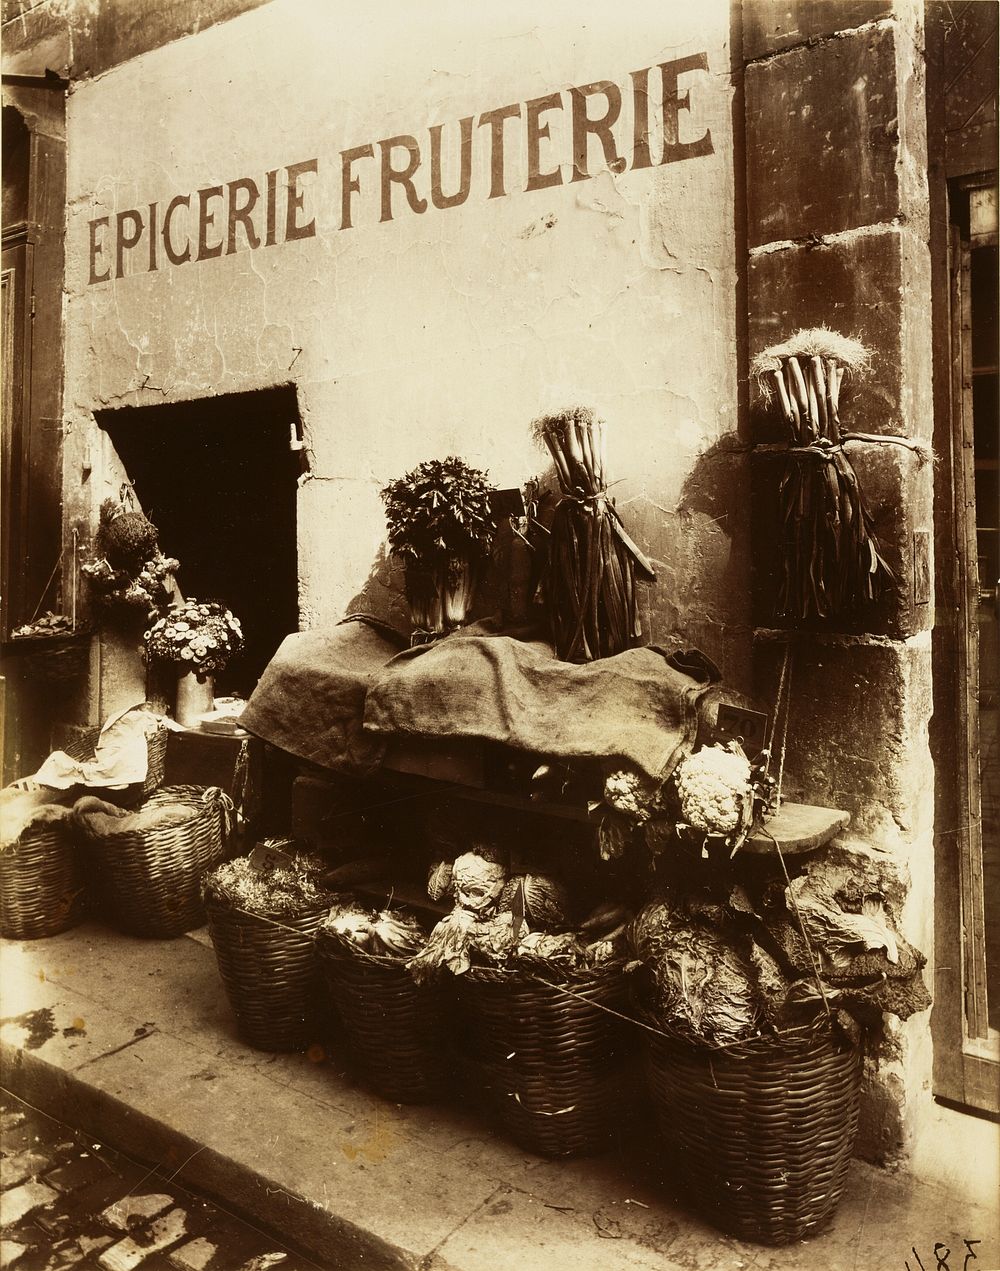 Epicerie Fruterie by Eugène Atget